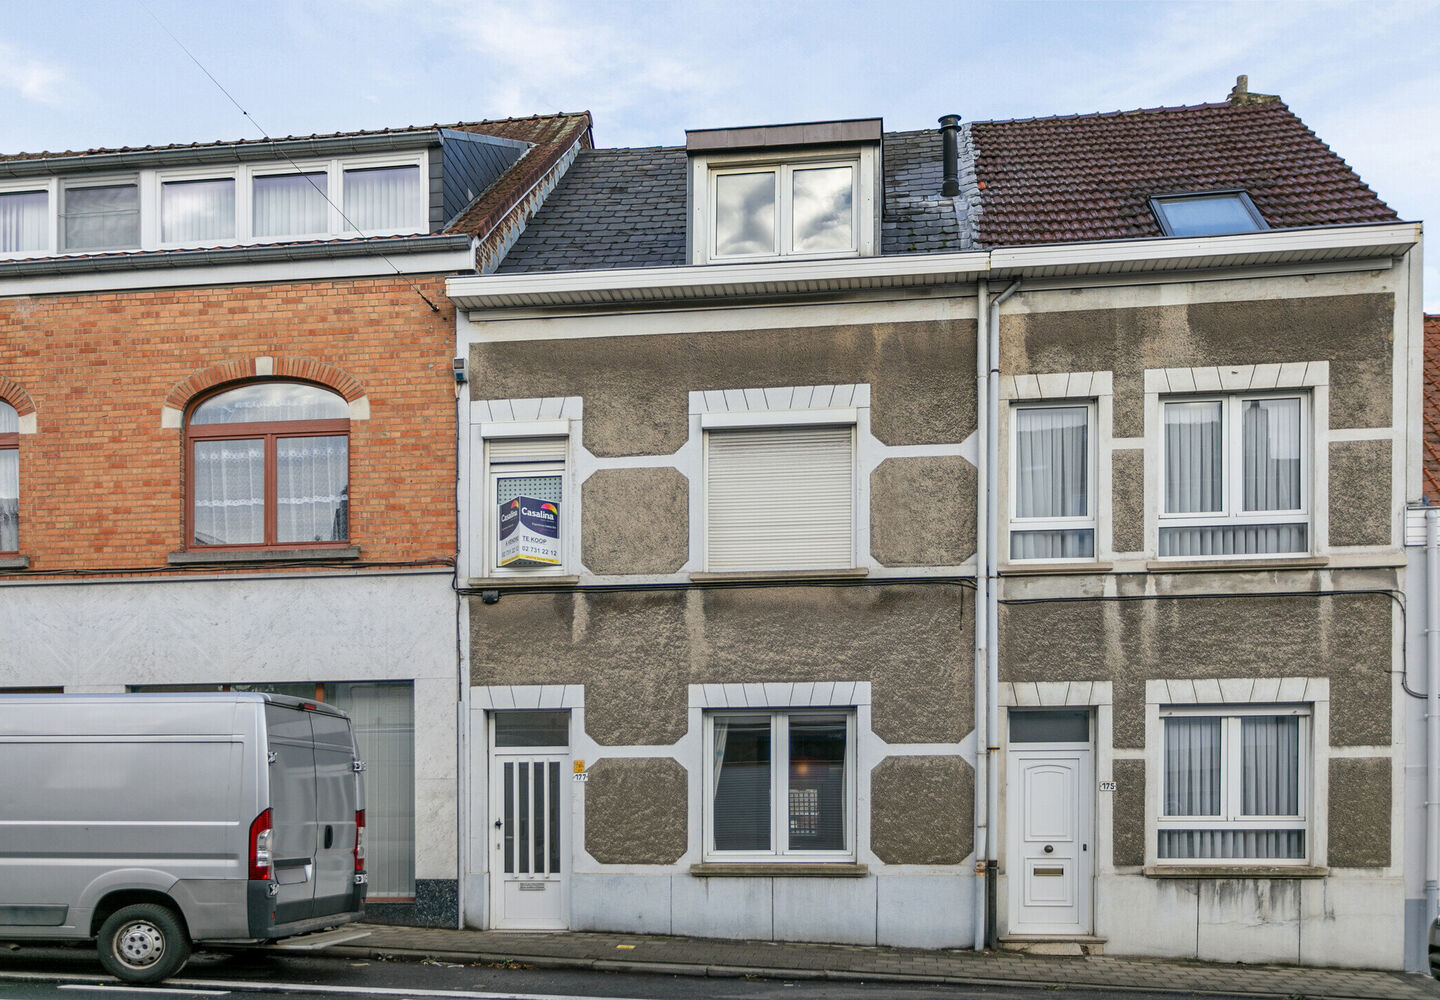 House for sale in Wezembeek-Oppem